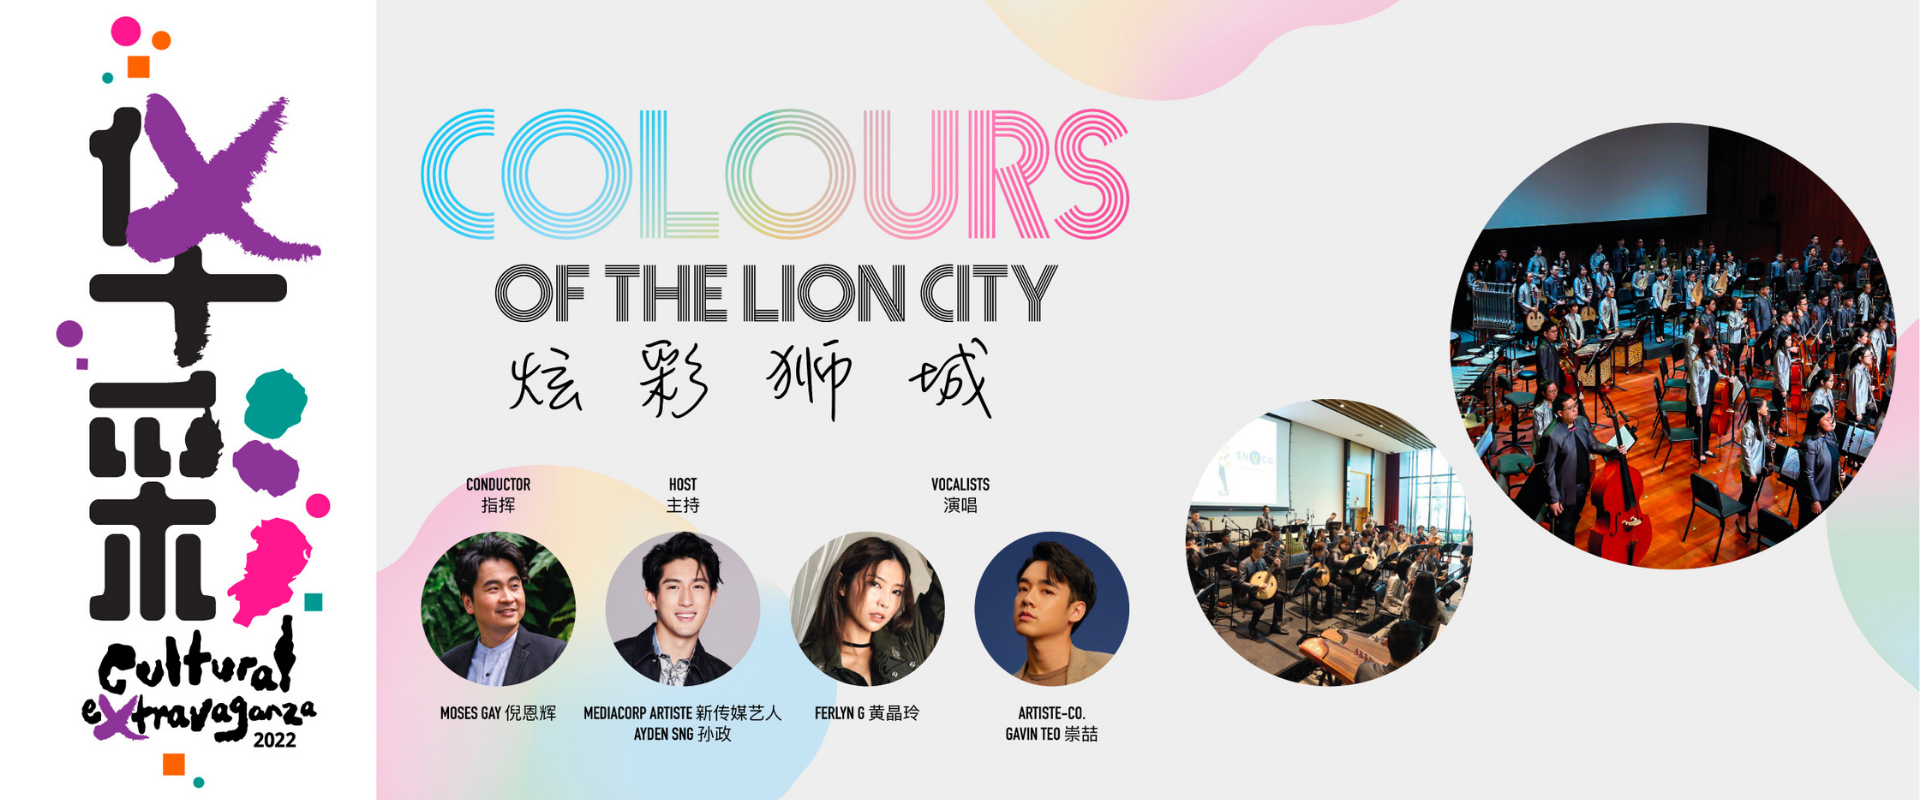 SNYCO_alumni Colours of the Lion City 